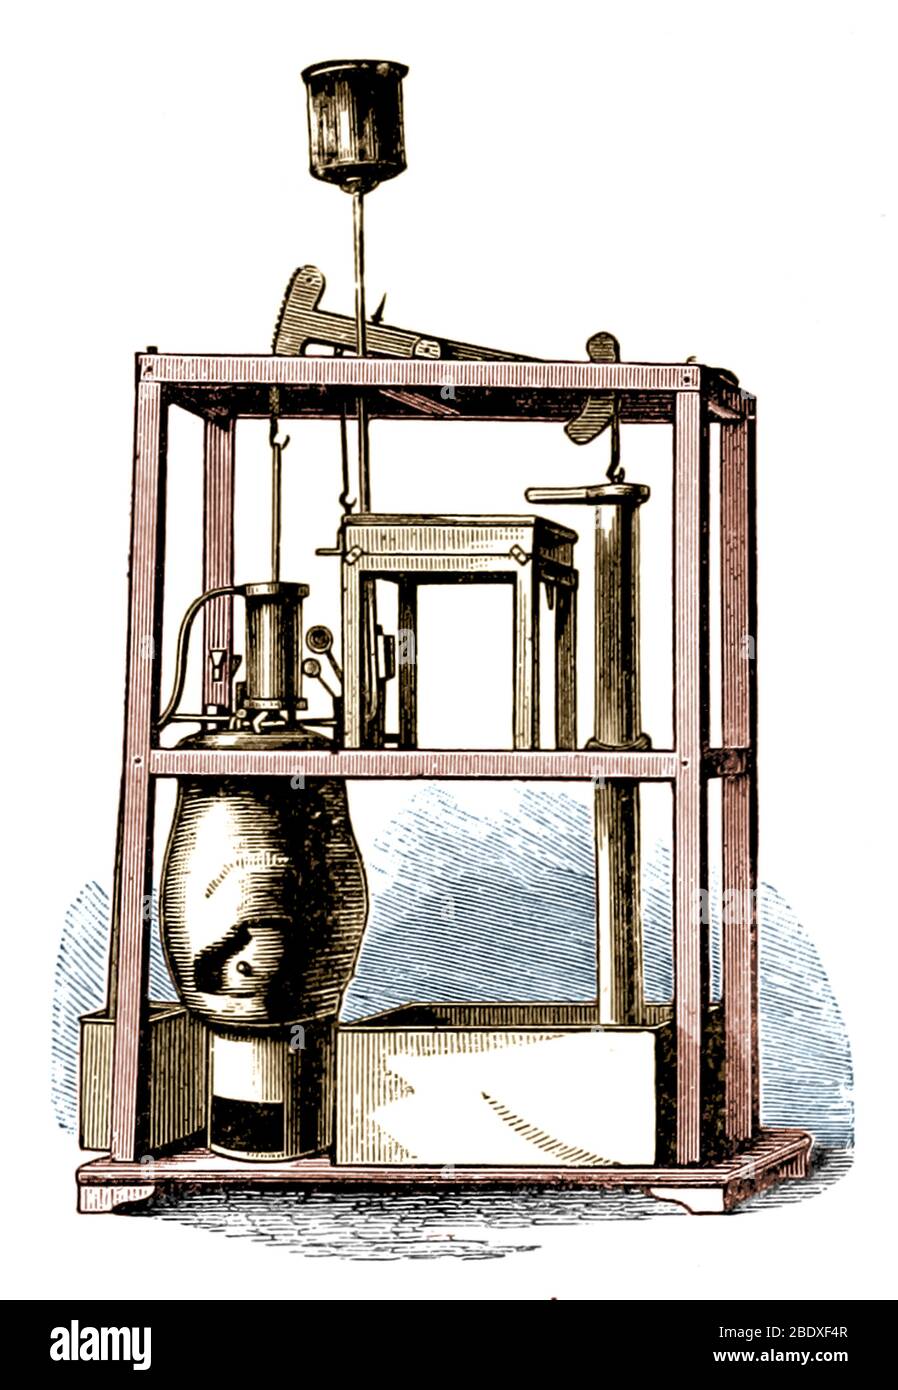 Motor de vapor de Newcomen, siglo XVIII Fotografía de - Alamy